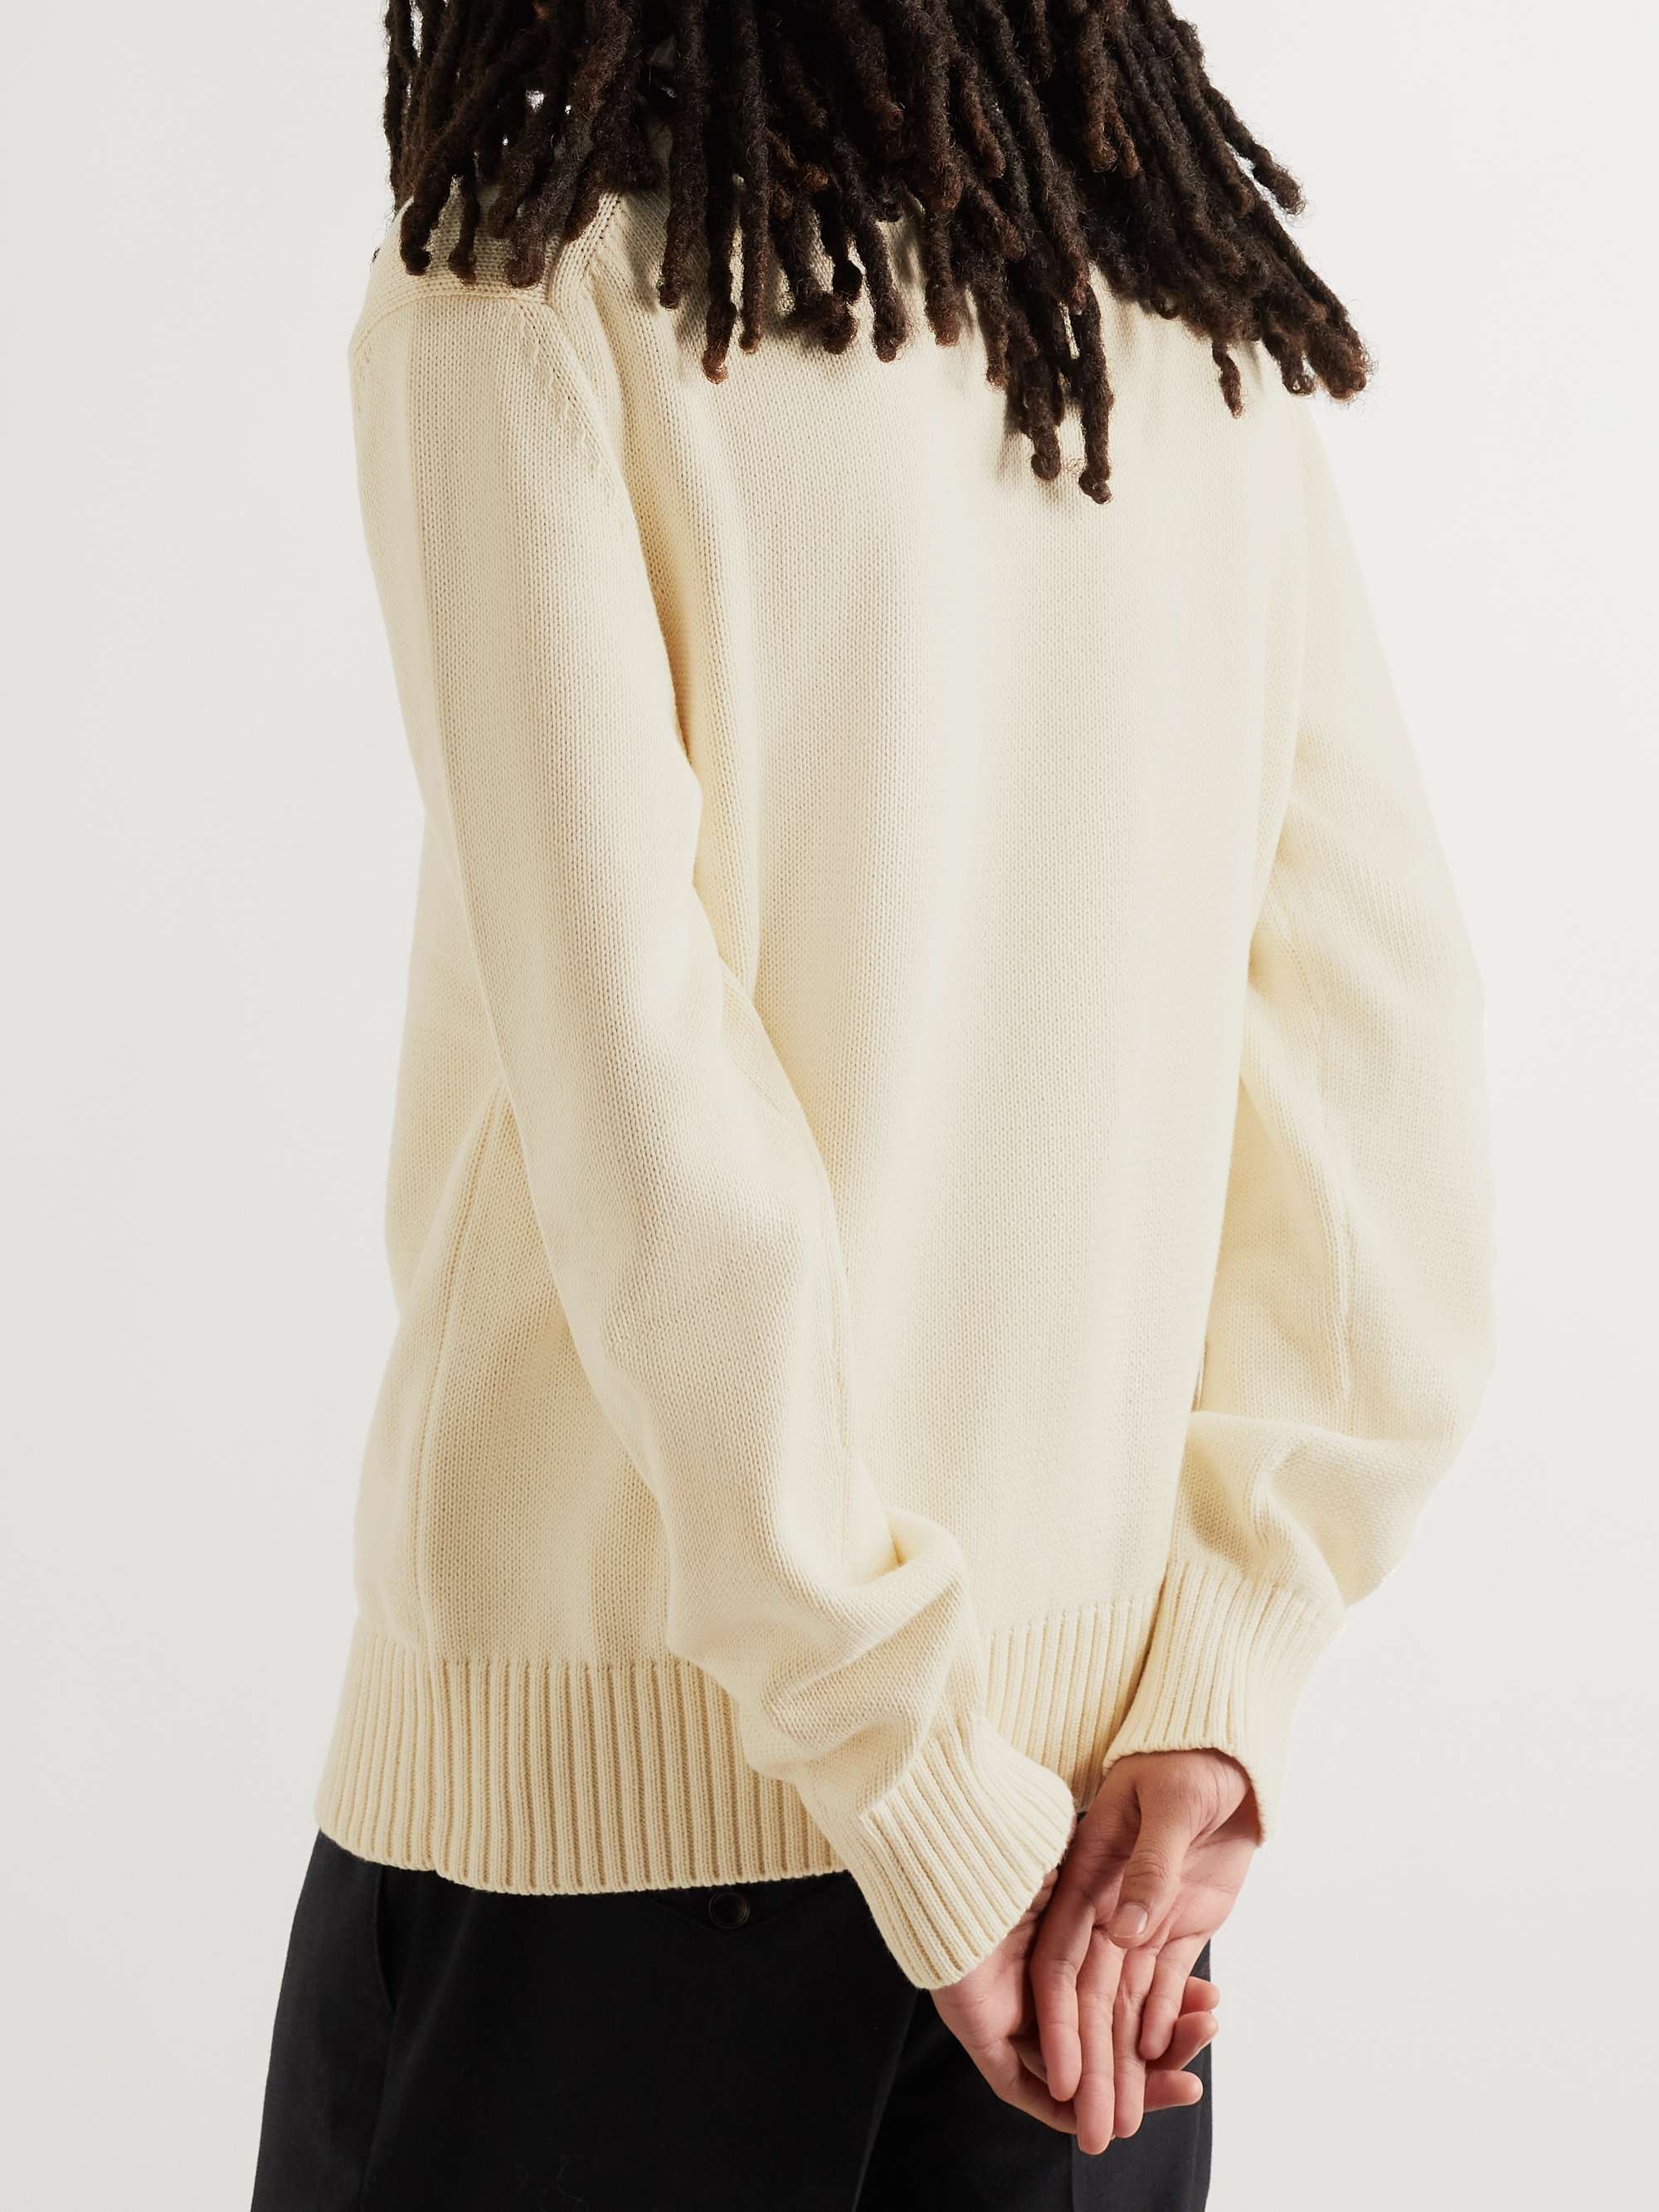 ALEXANDER MCQUEEN Embroidered Cotton Sweater